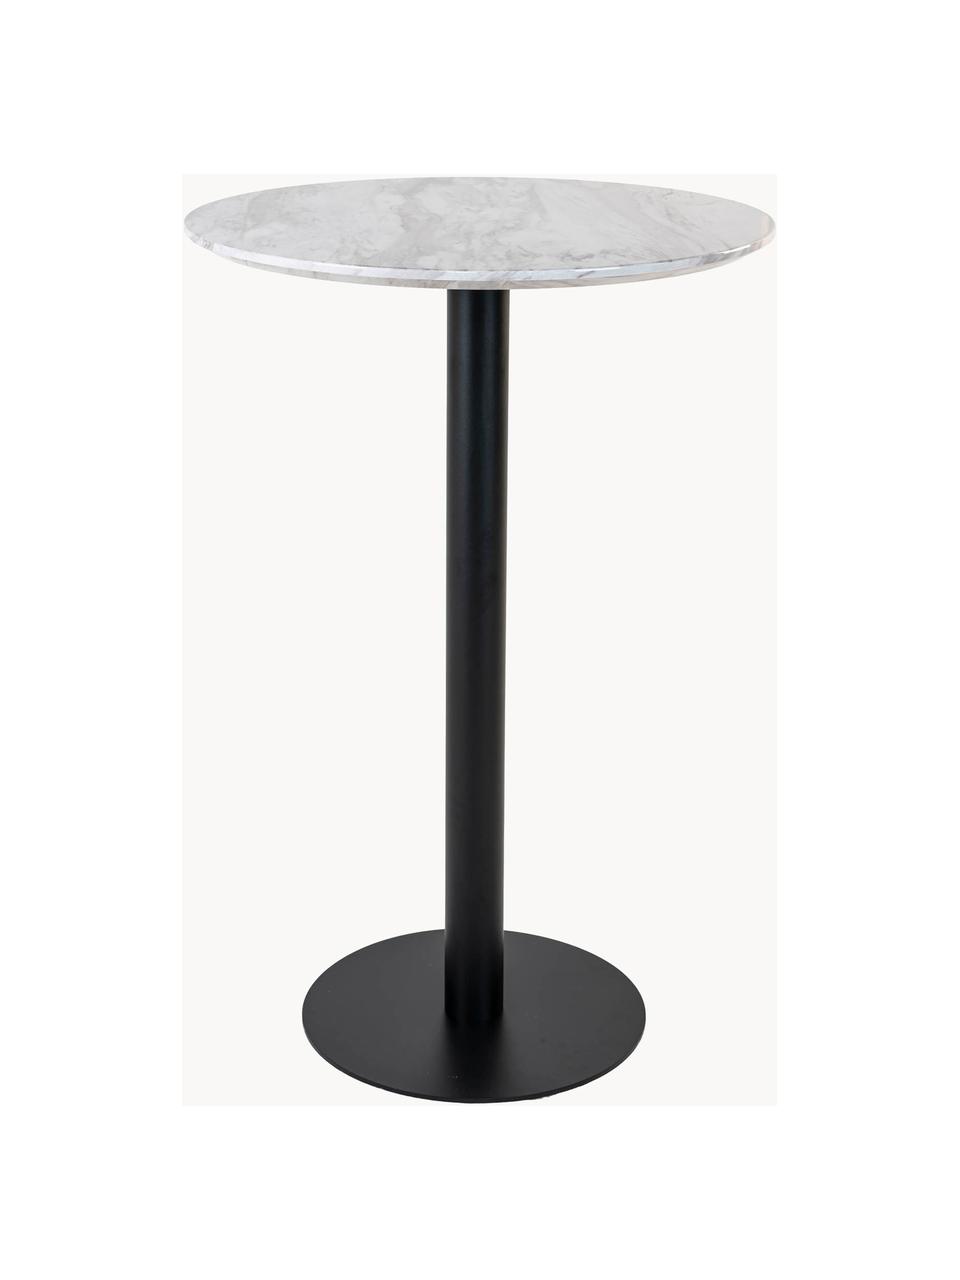 Table haute ronde look marbre Bolzano, Ø 70 cm, Blanc marbré, noir, Ø 70 x haut. 105 cm